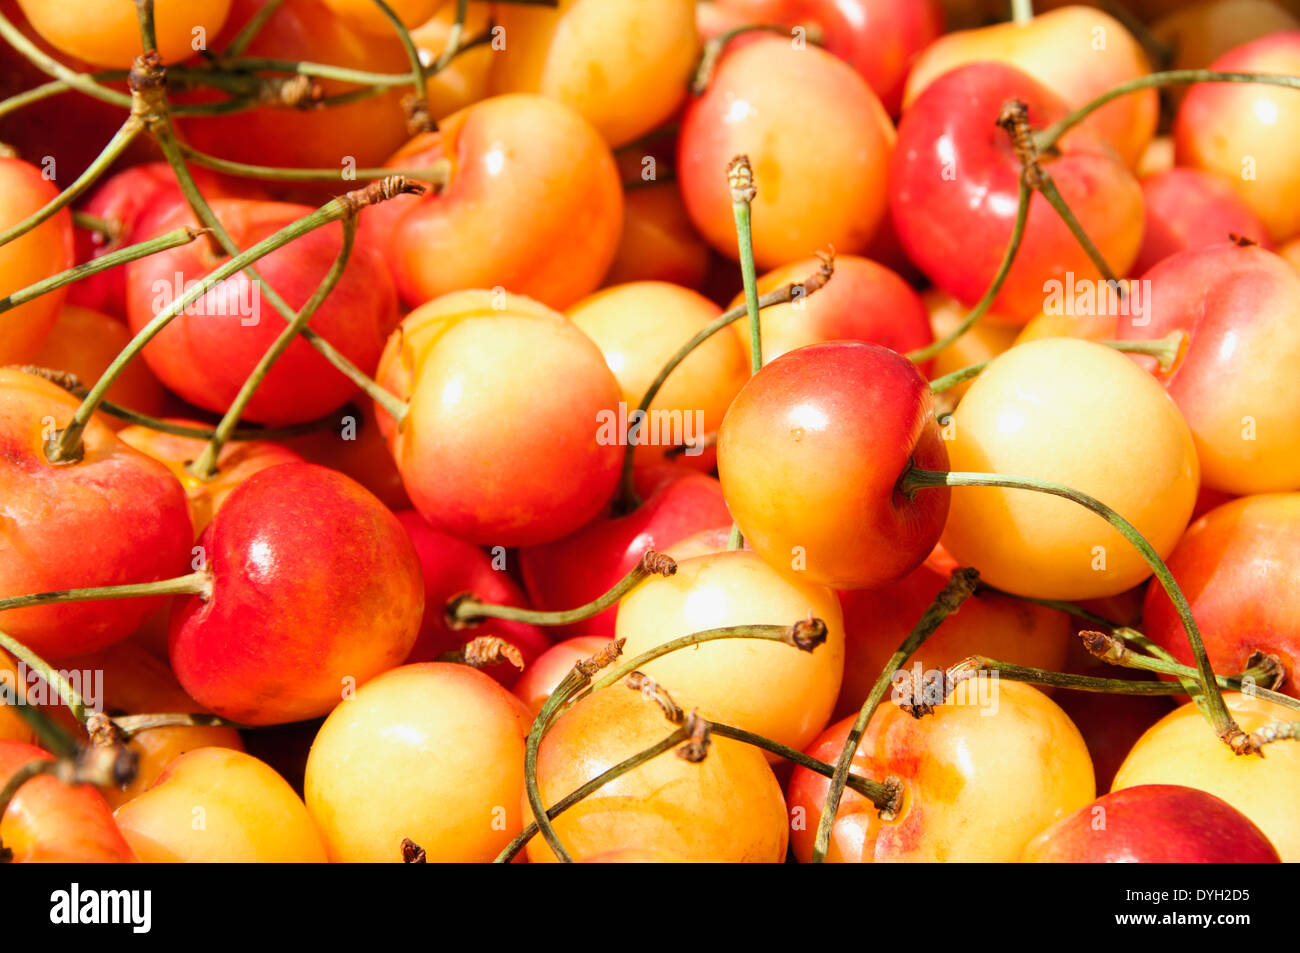 A pile of rainier cherries found at a farmers market. Stock Photo